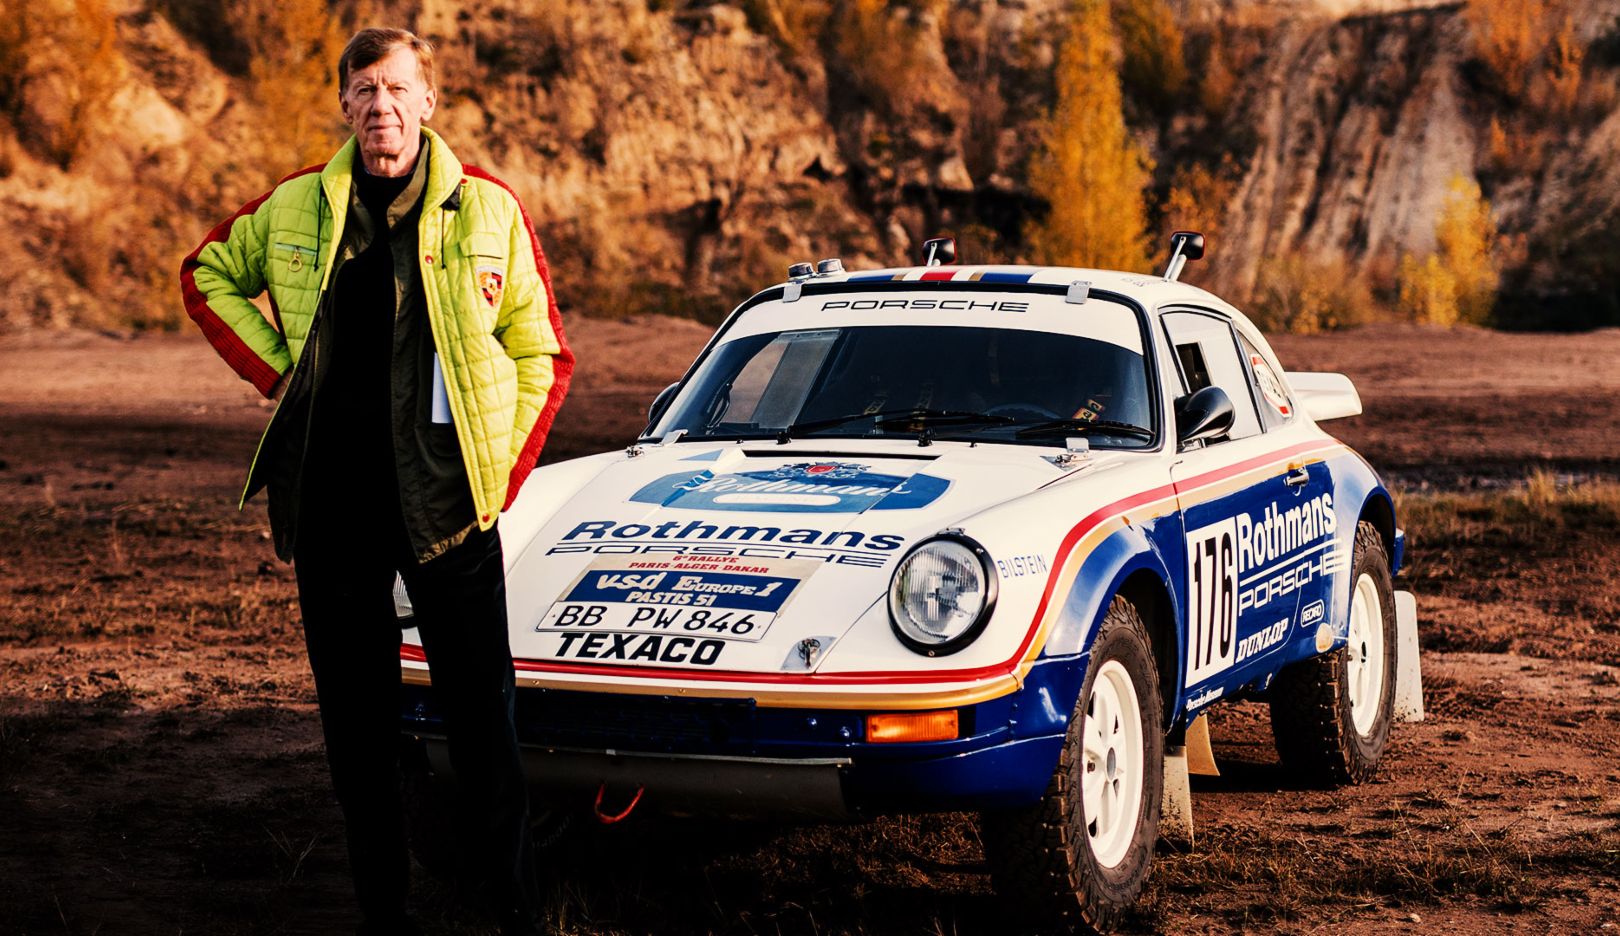 Porsche Top 5 Series: Rallye Cars